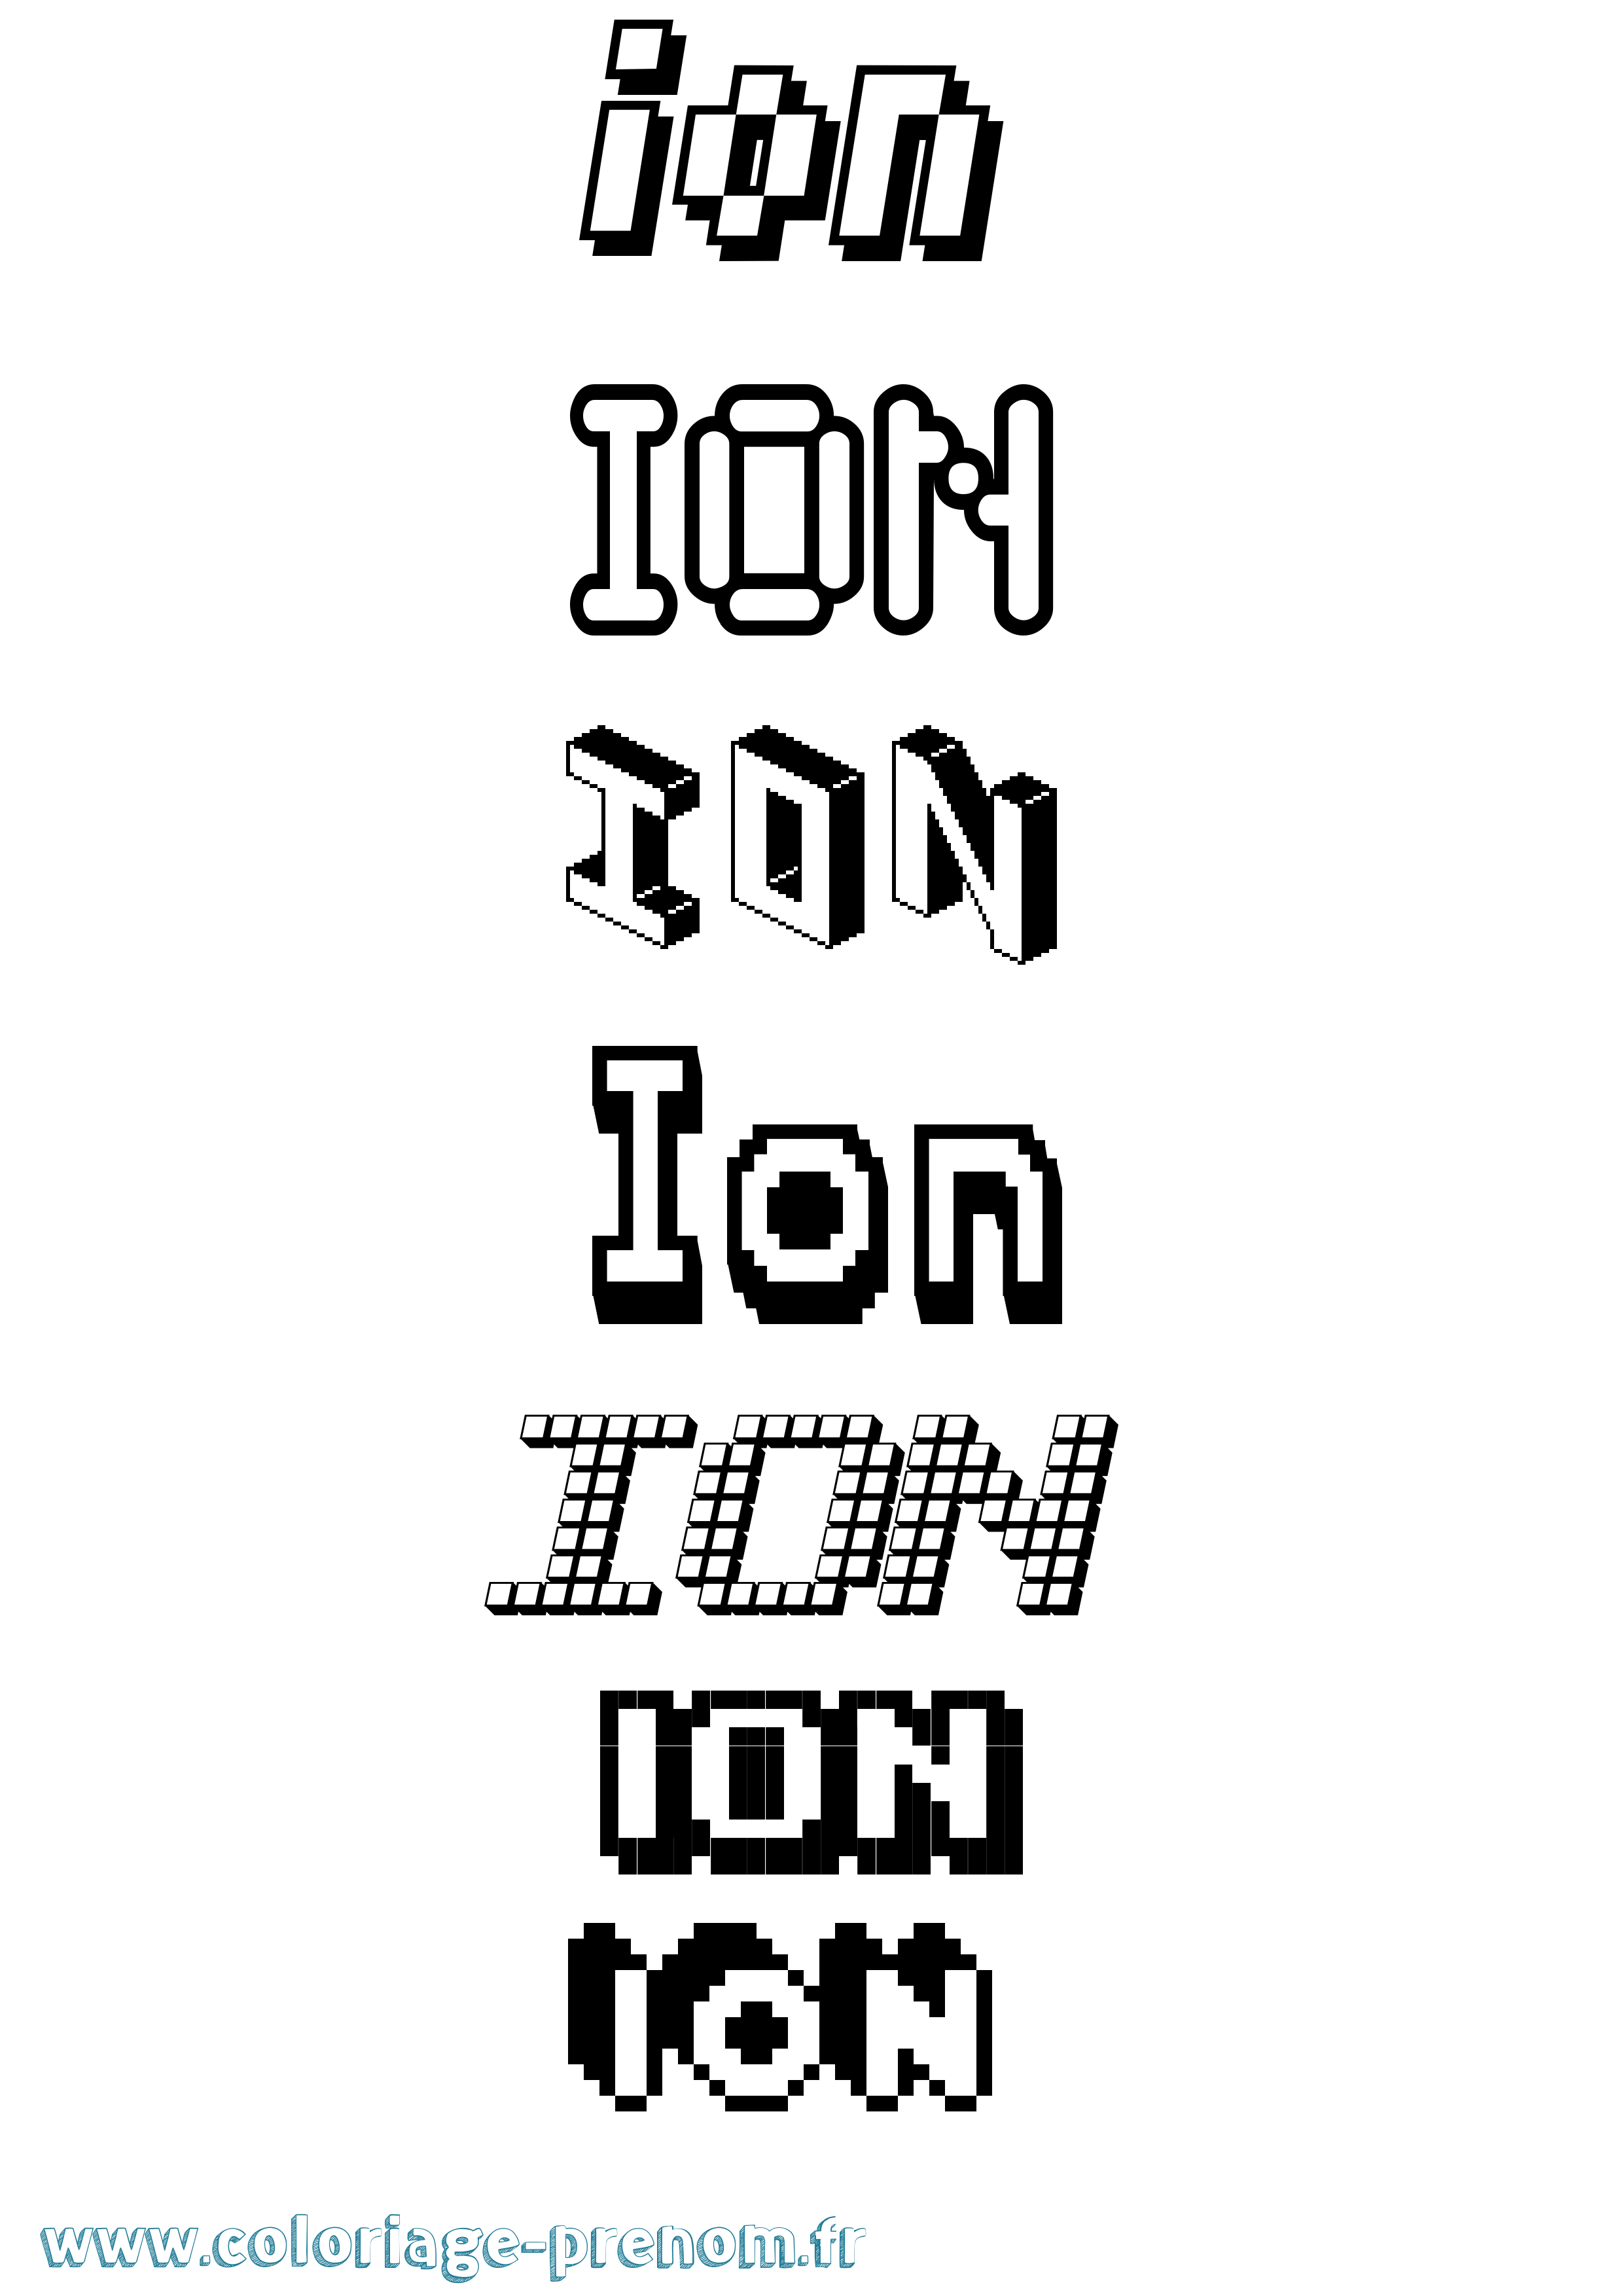 Coloriage prénom Ion Pixel